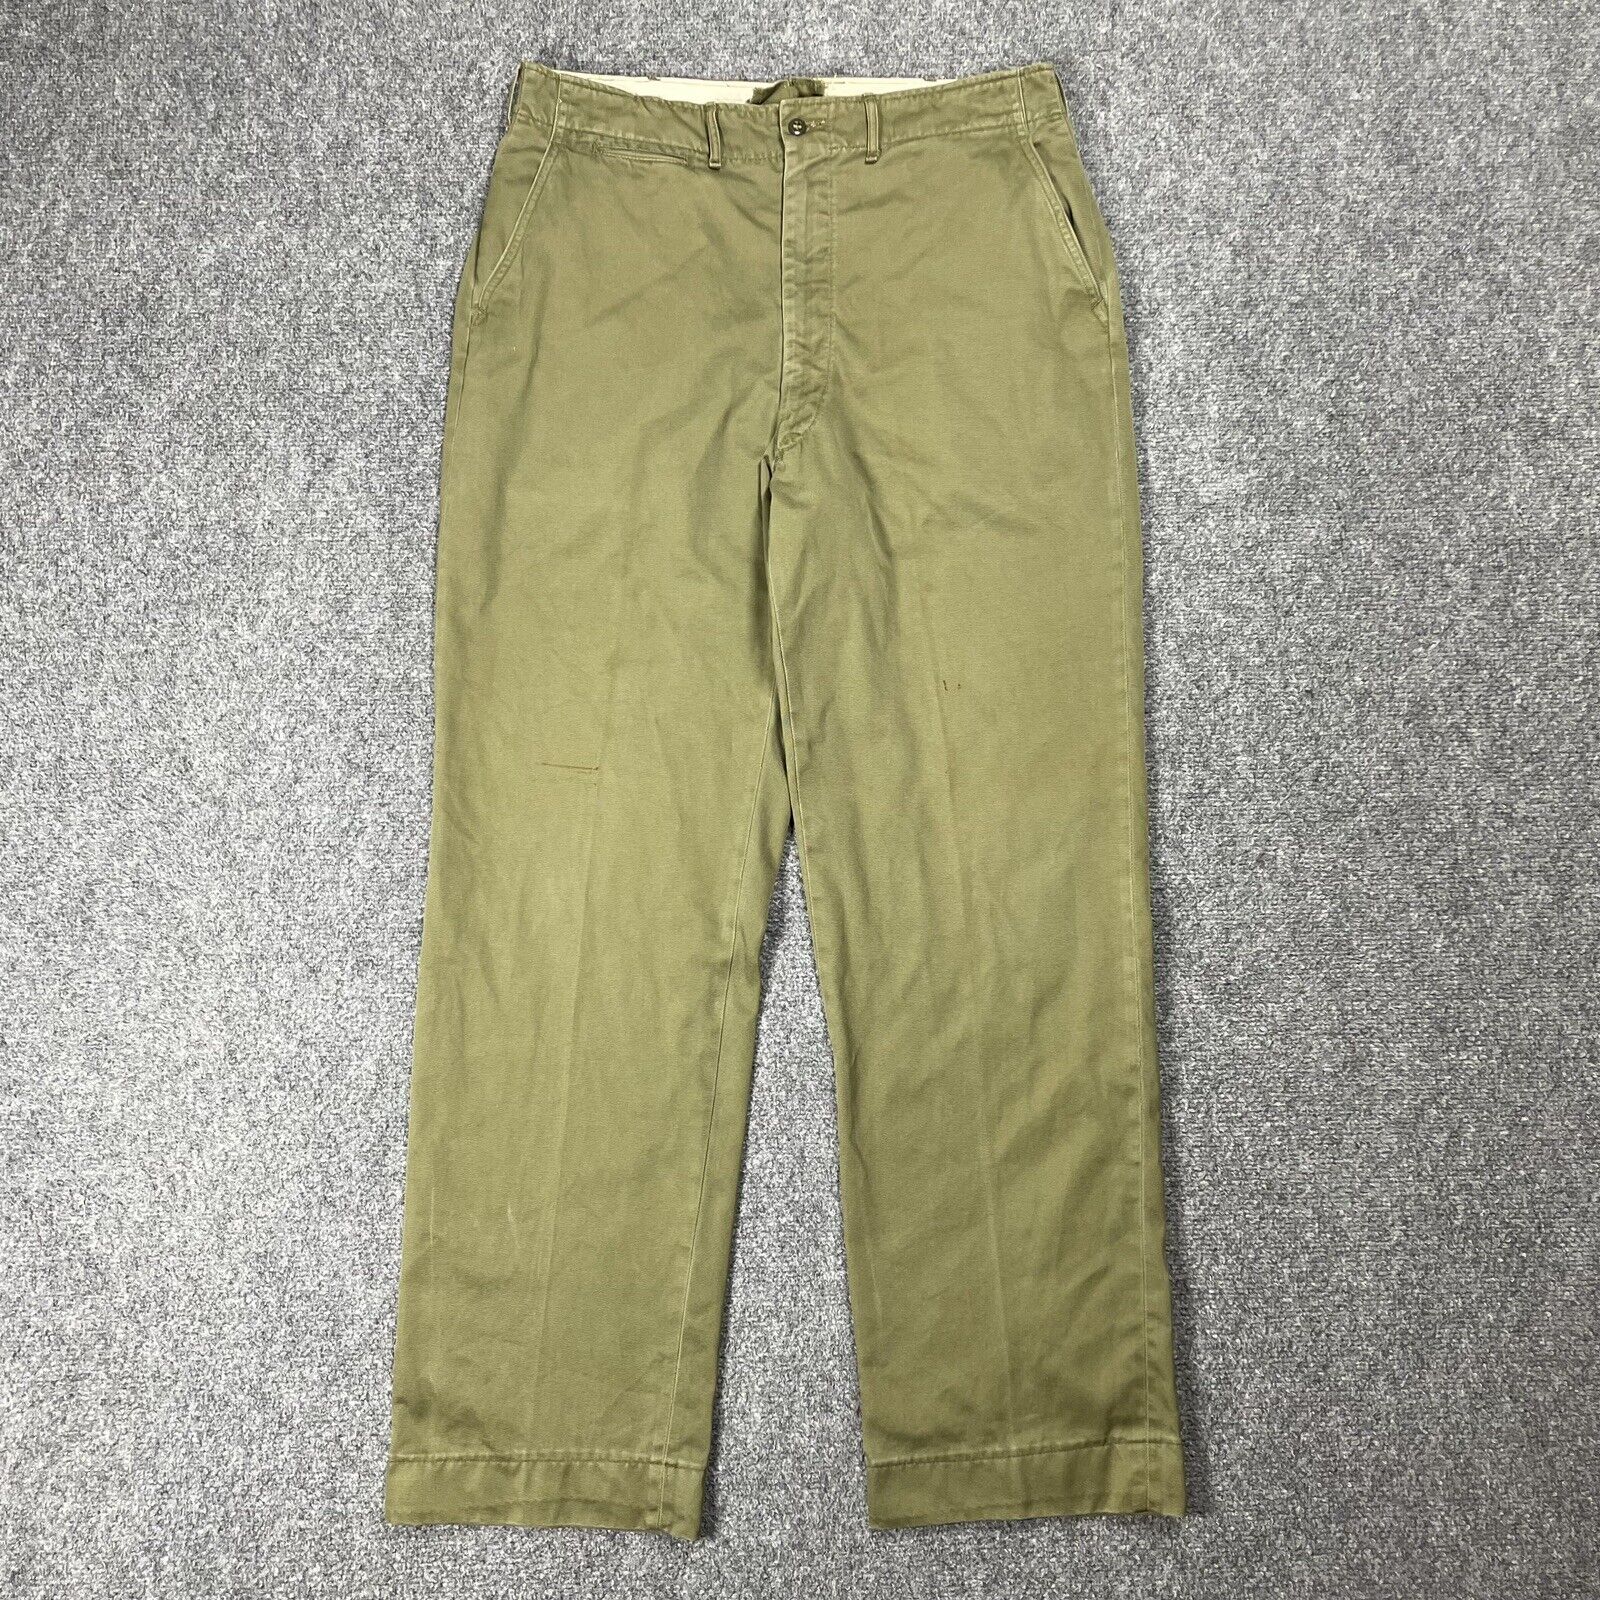 VINTAGE WWII Trousers Pants Size 33x31 Uniform OD Green Cotton Khaki Twill 40s